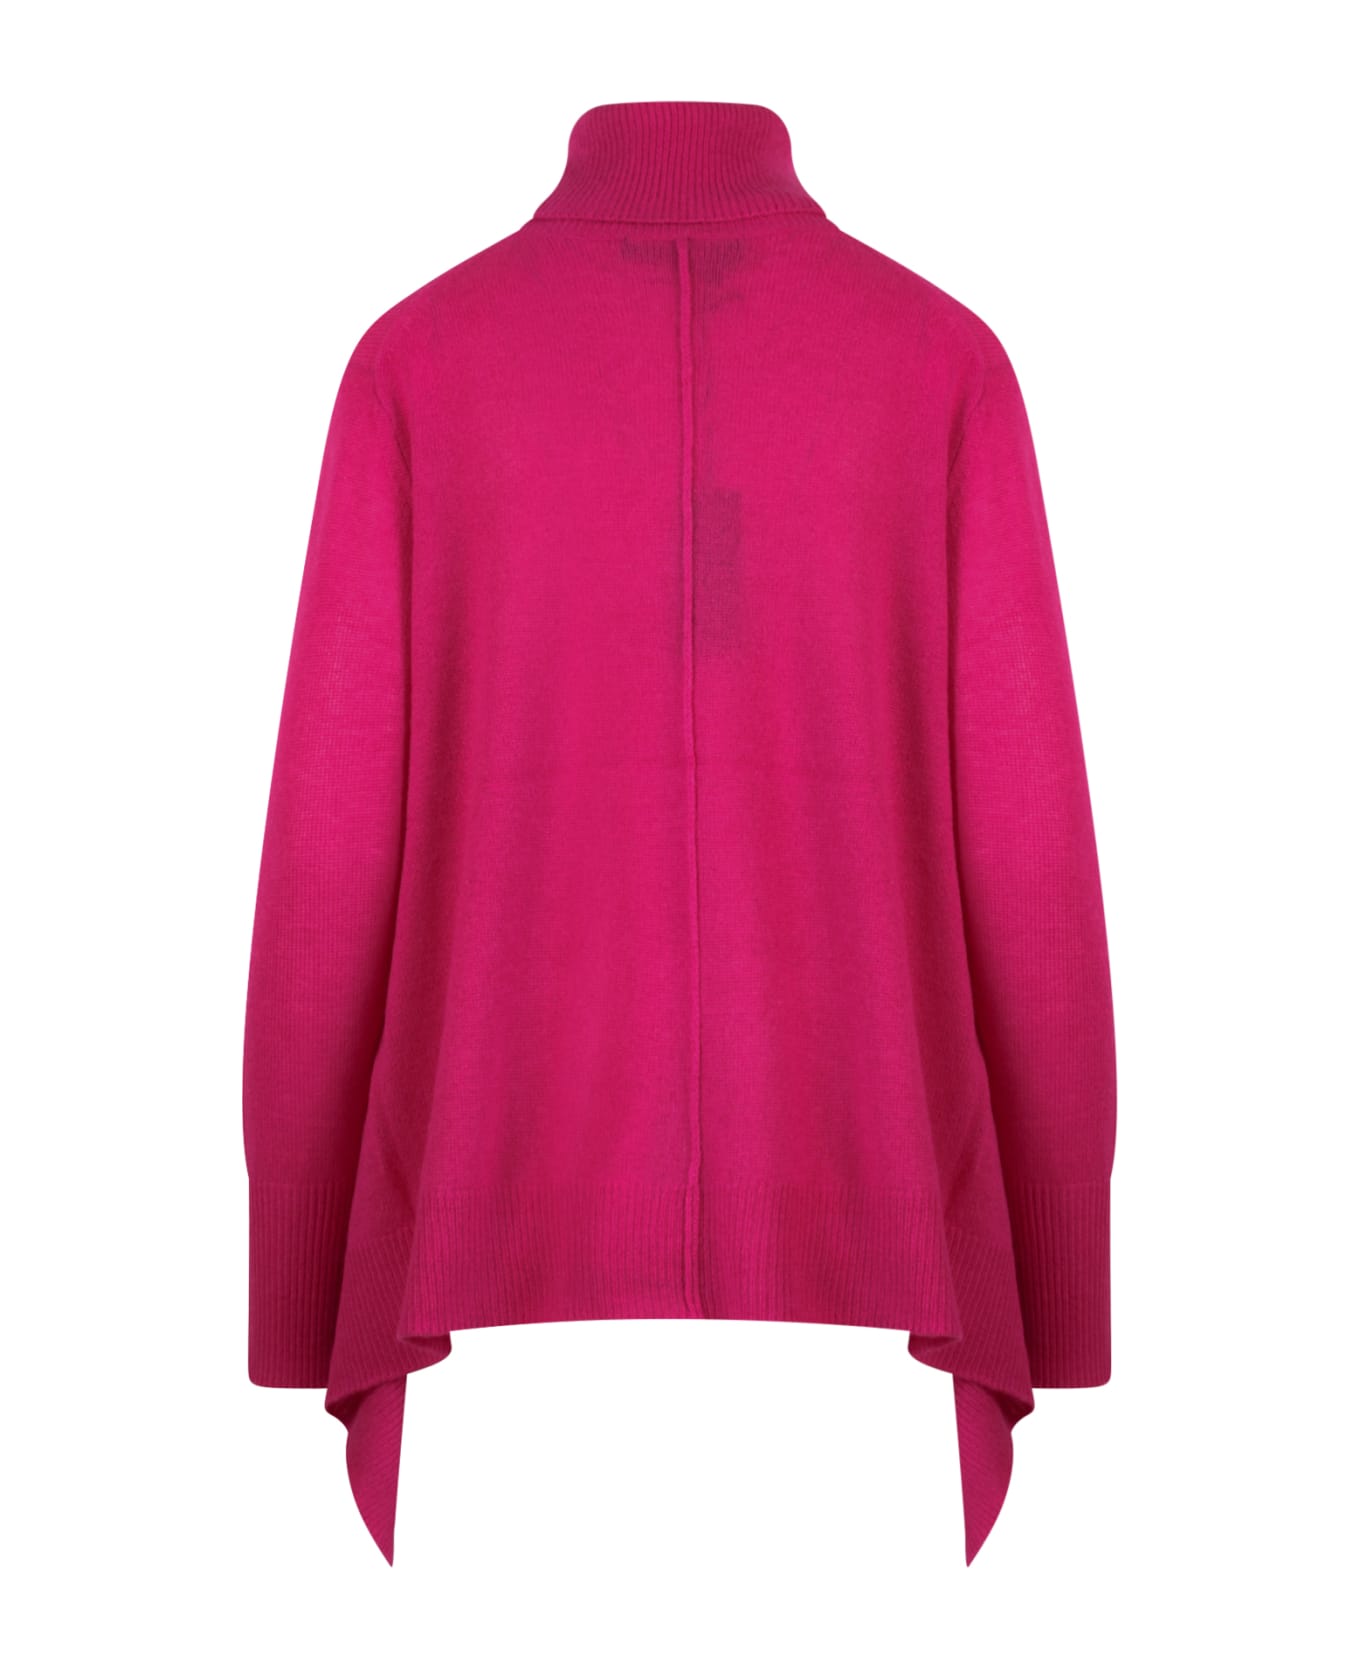 360Cashmere Sweater - Pink ニットウェア